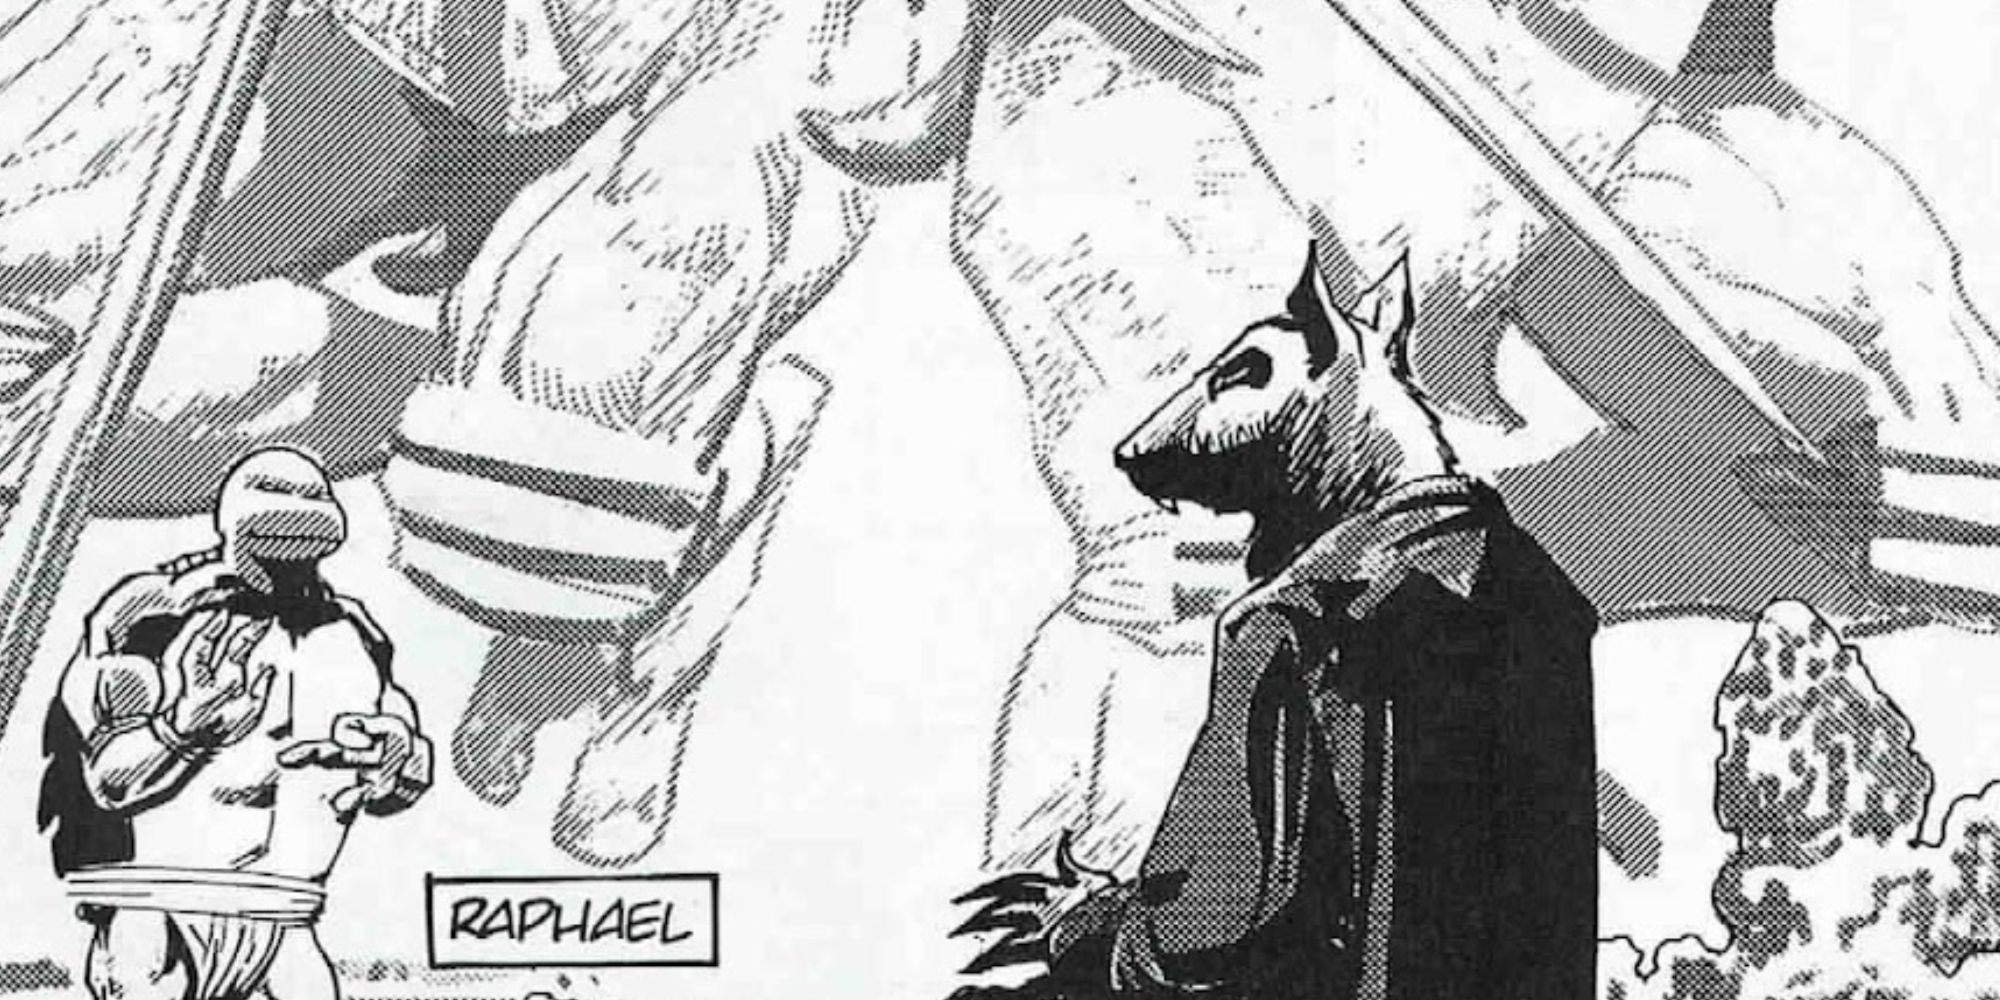 Raphael consults Splinter in Teenage Mutant Ninja Turtles comics.